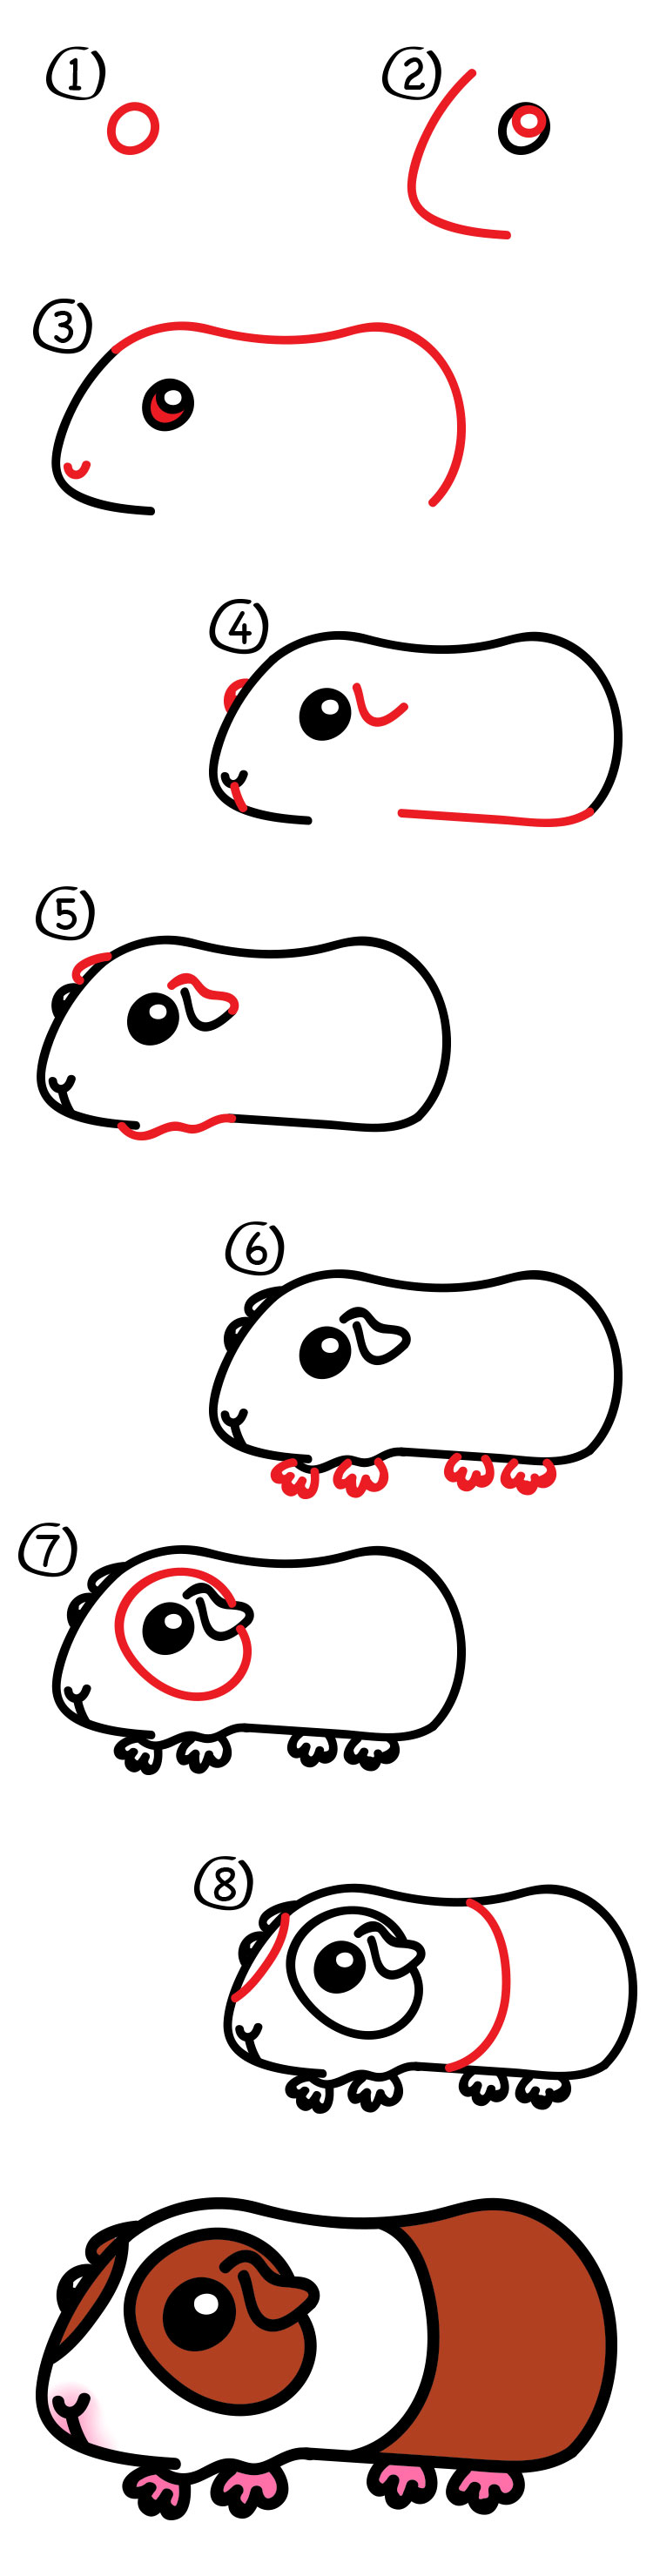 How To Draw A Guinea Pig - Art For Kids Hub -